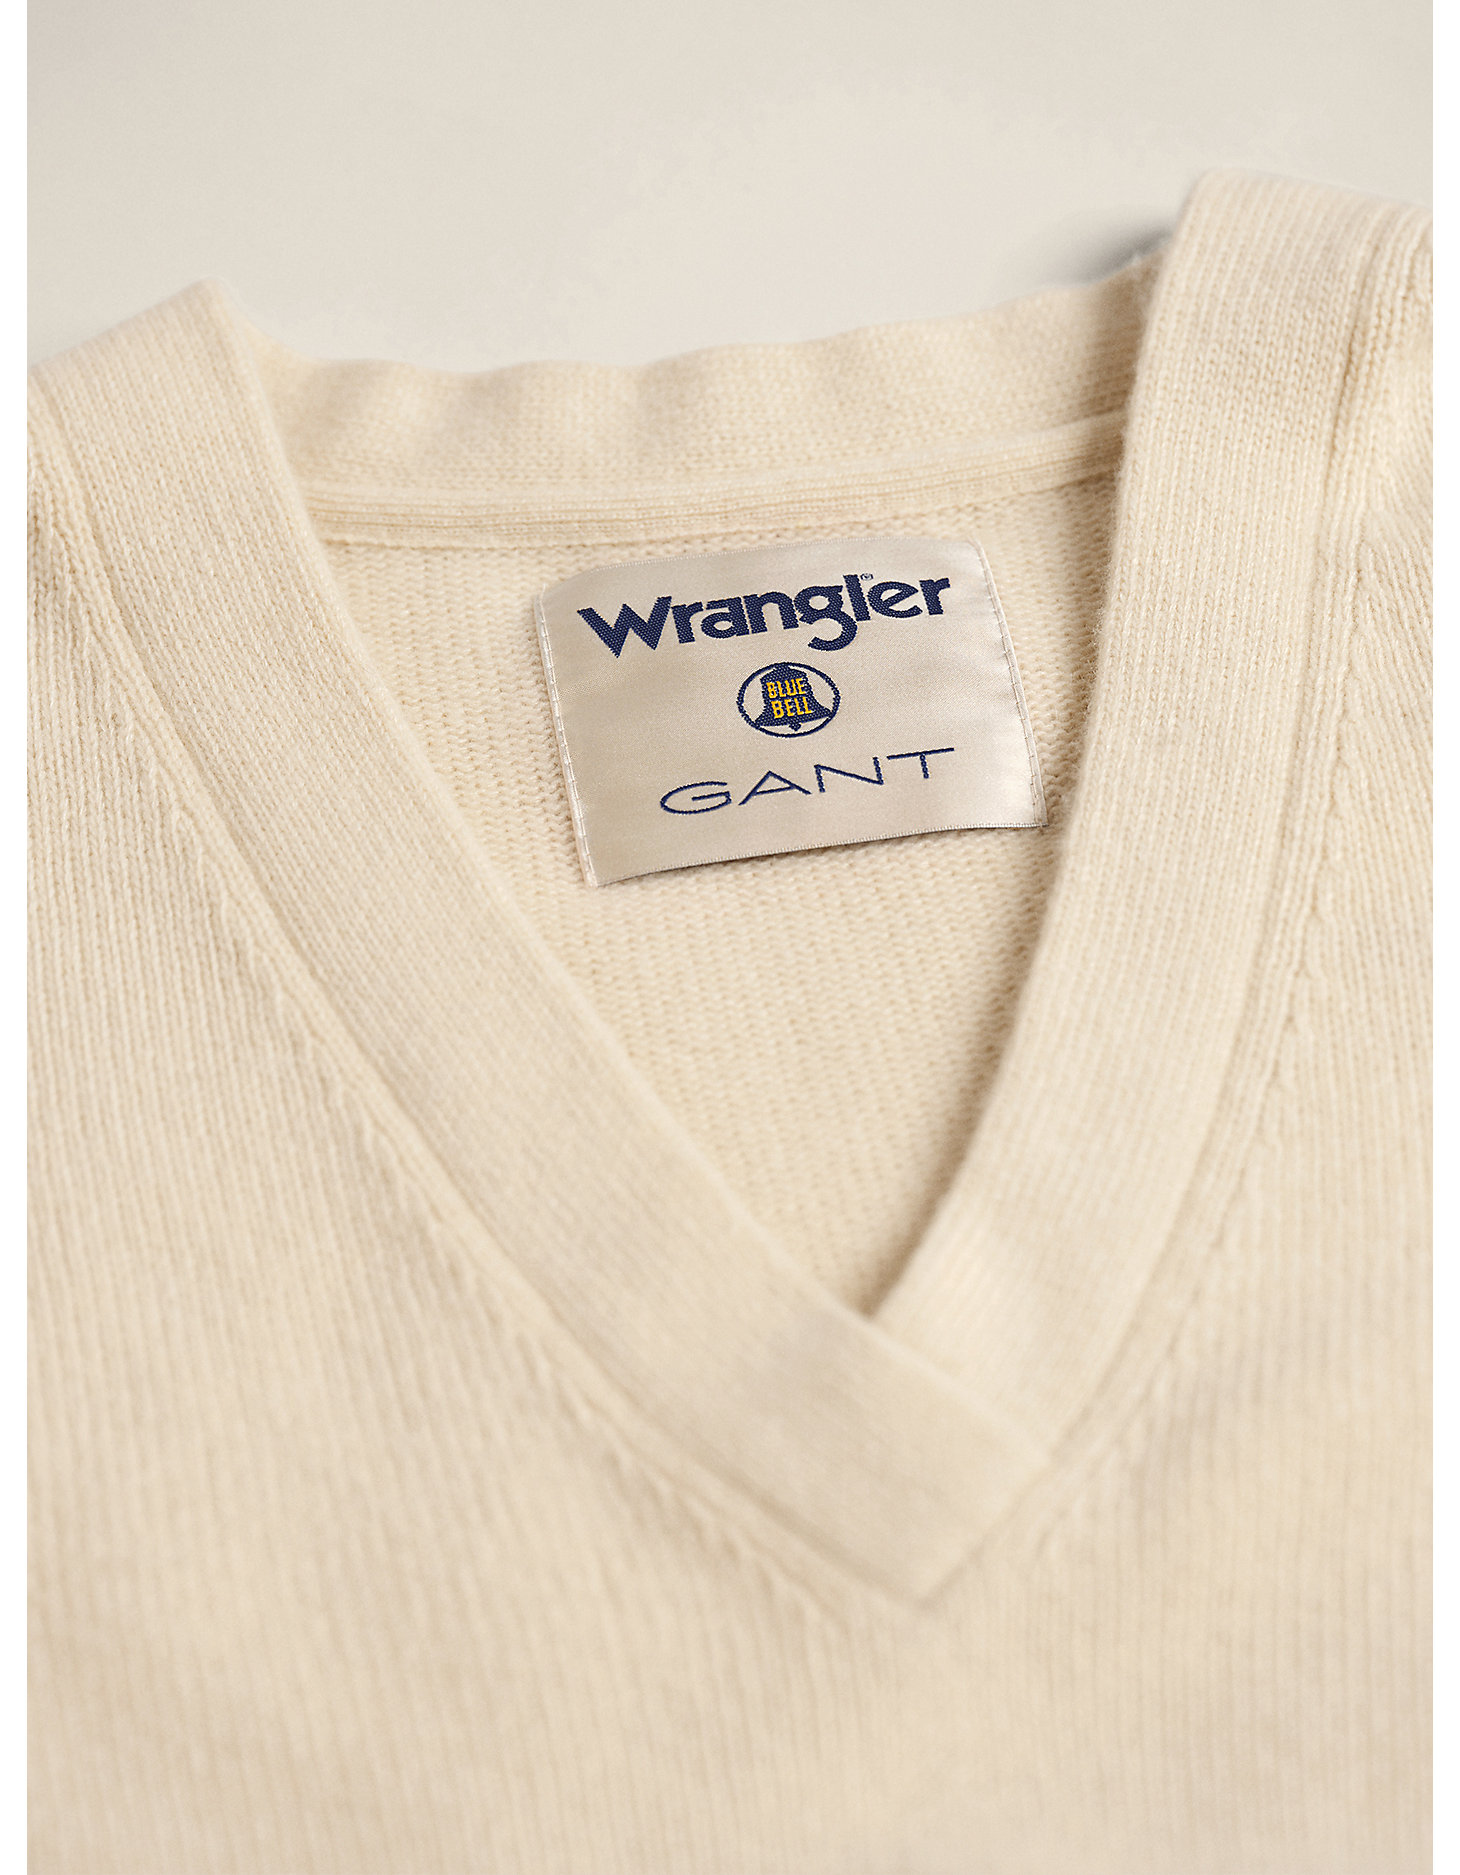 GANT x Wrangler Women's Cashmere Blend Sweater in Vintage Cream alternative view 5